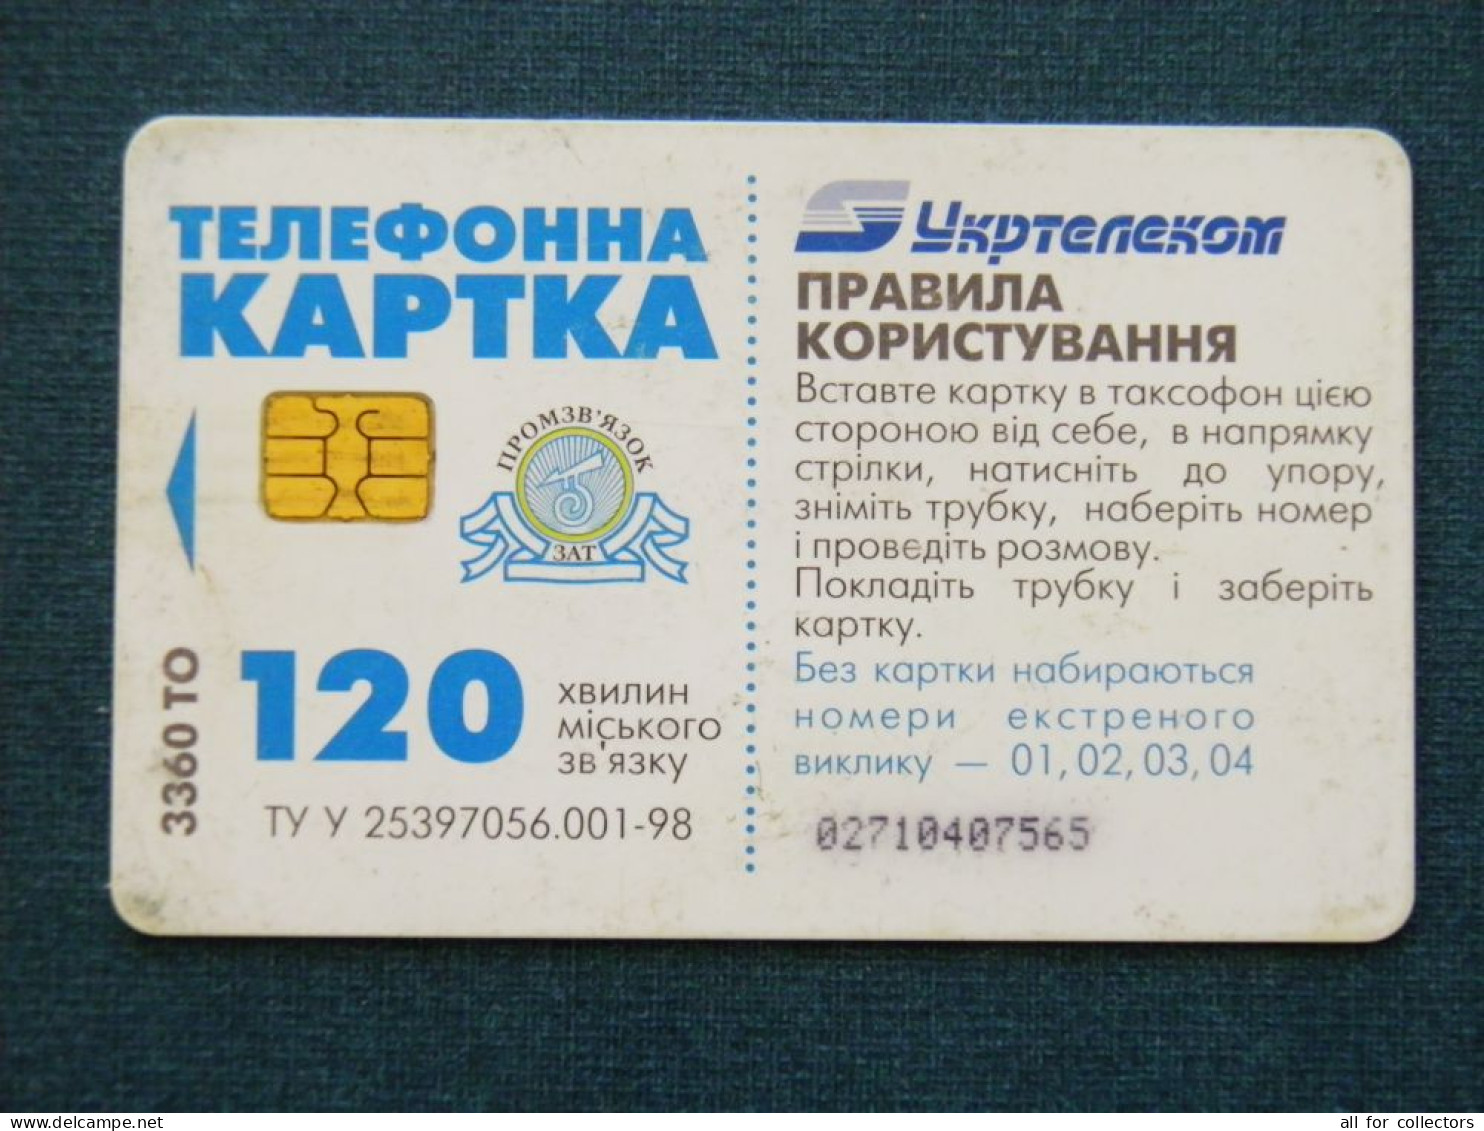 Phonecard Chip Advertising Argo Vodka Drink 3360 Units 120 Calls UKRAINE - Ucrania